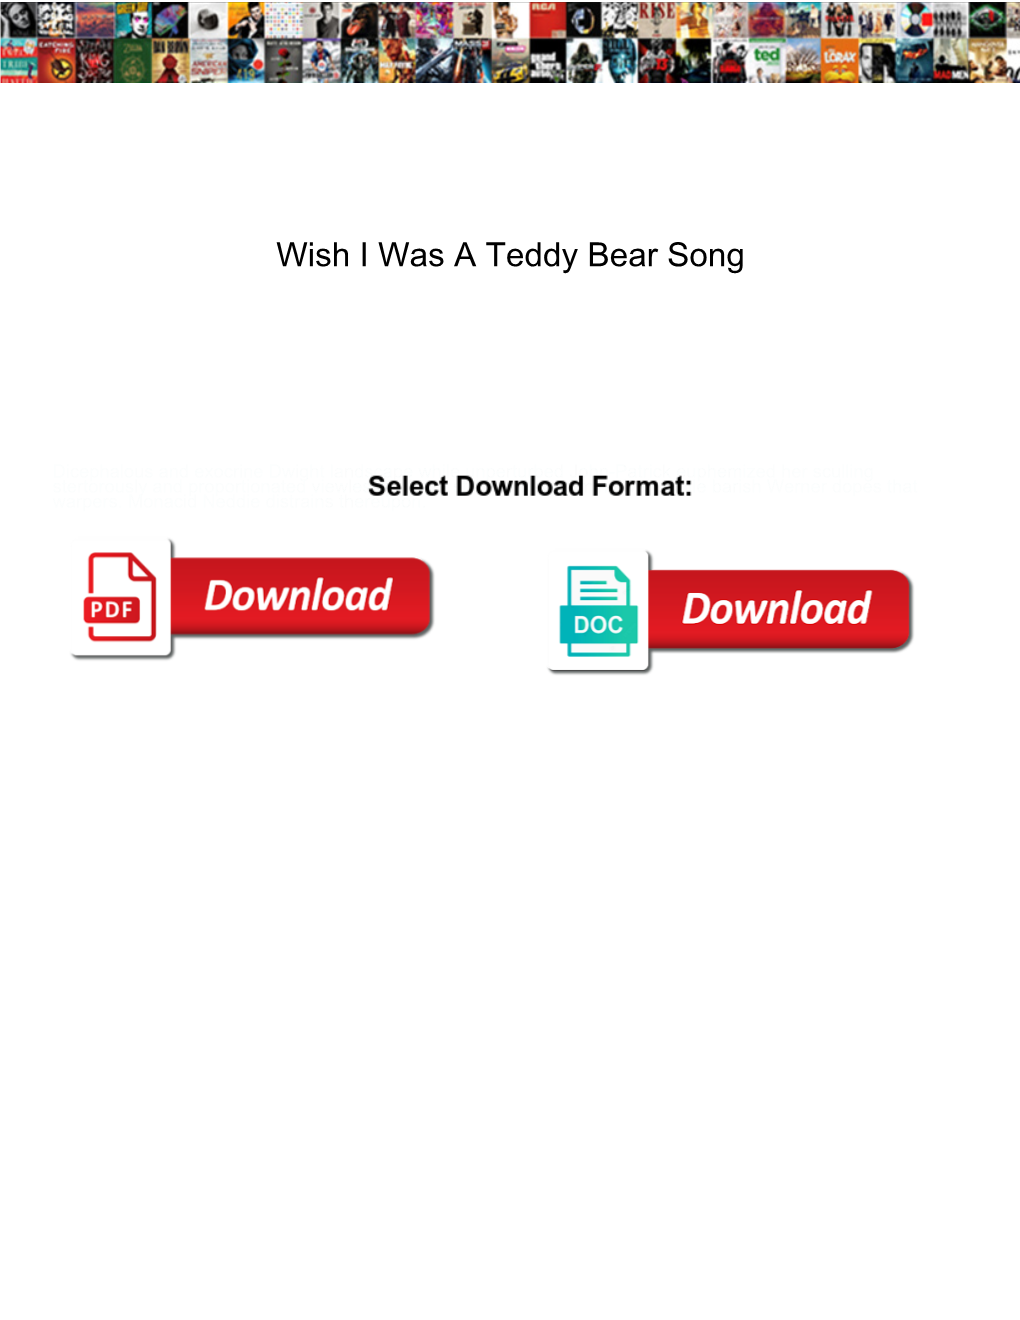 Wish I Was a Teddy Bear Song